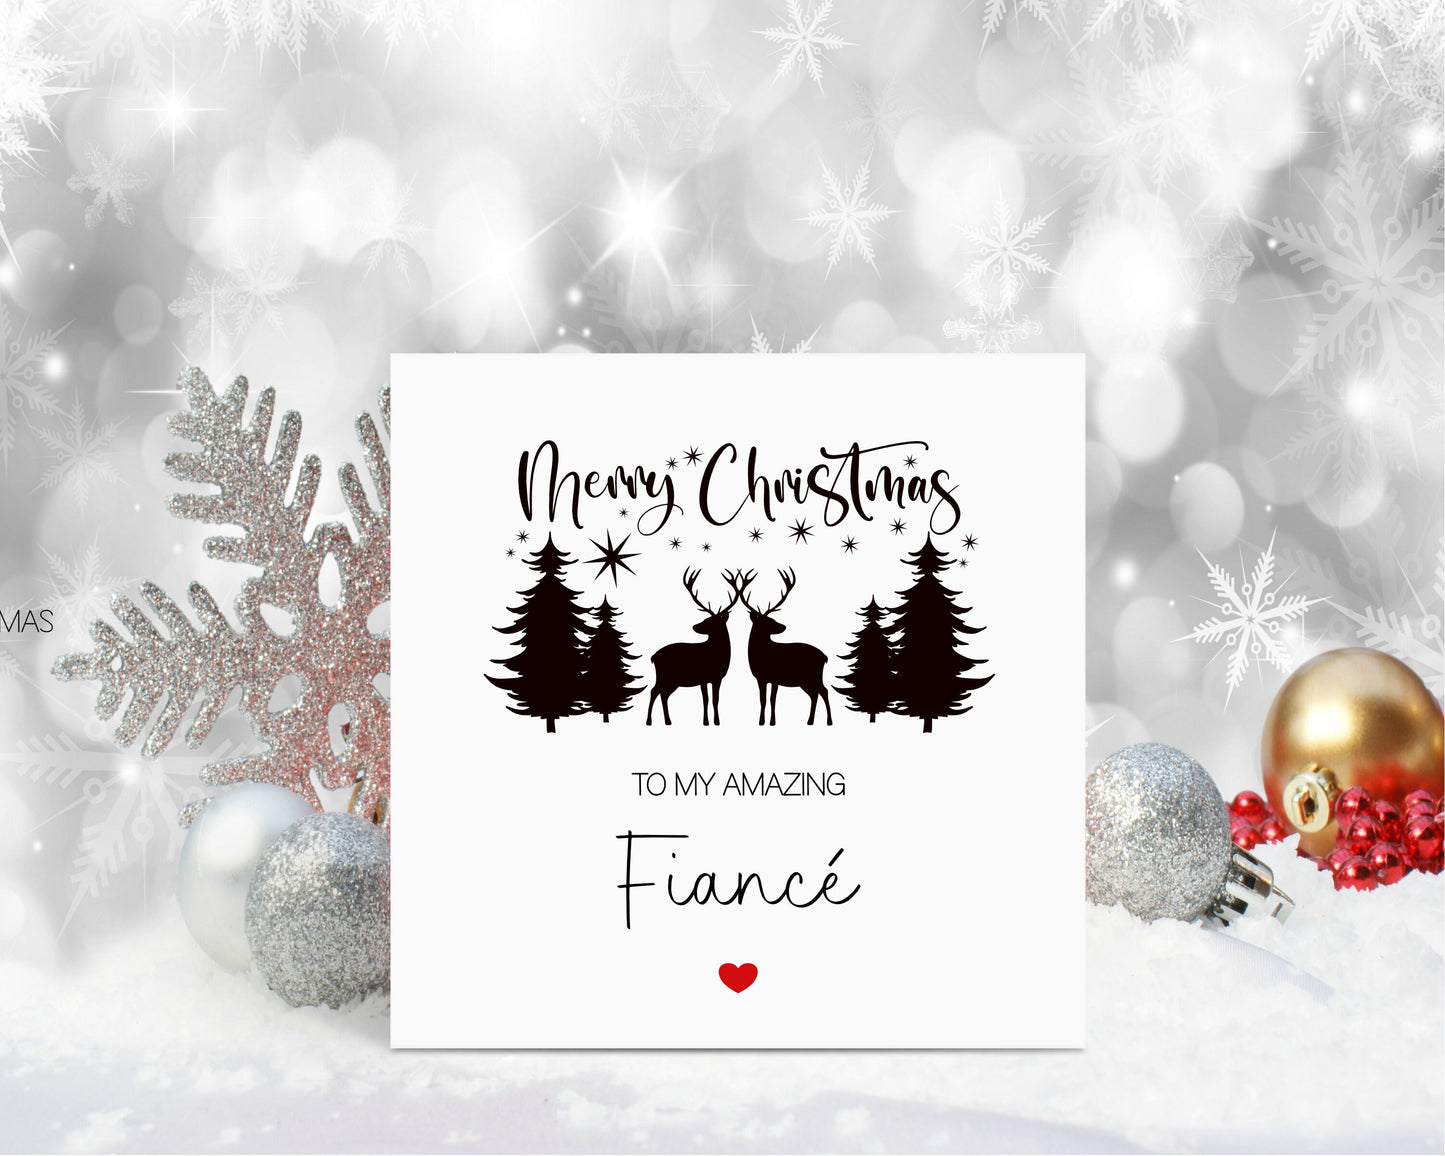 Fiancee Christmas Card, Christmas Card For Fiancee, Personalised Christmas Card, Christmas In July